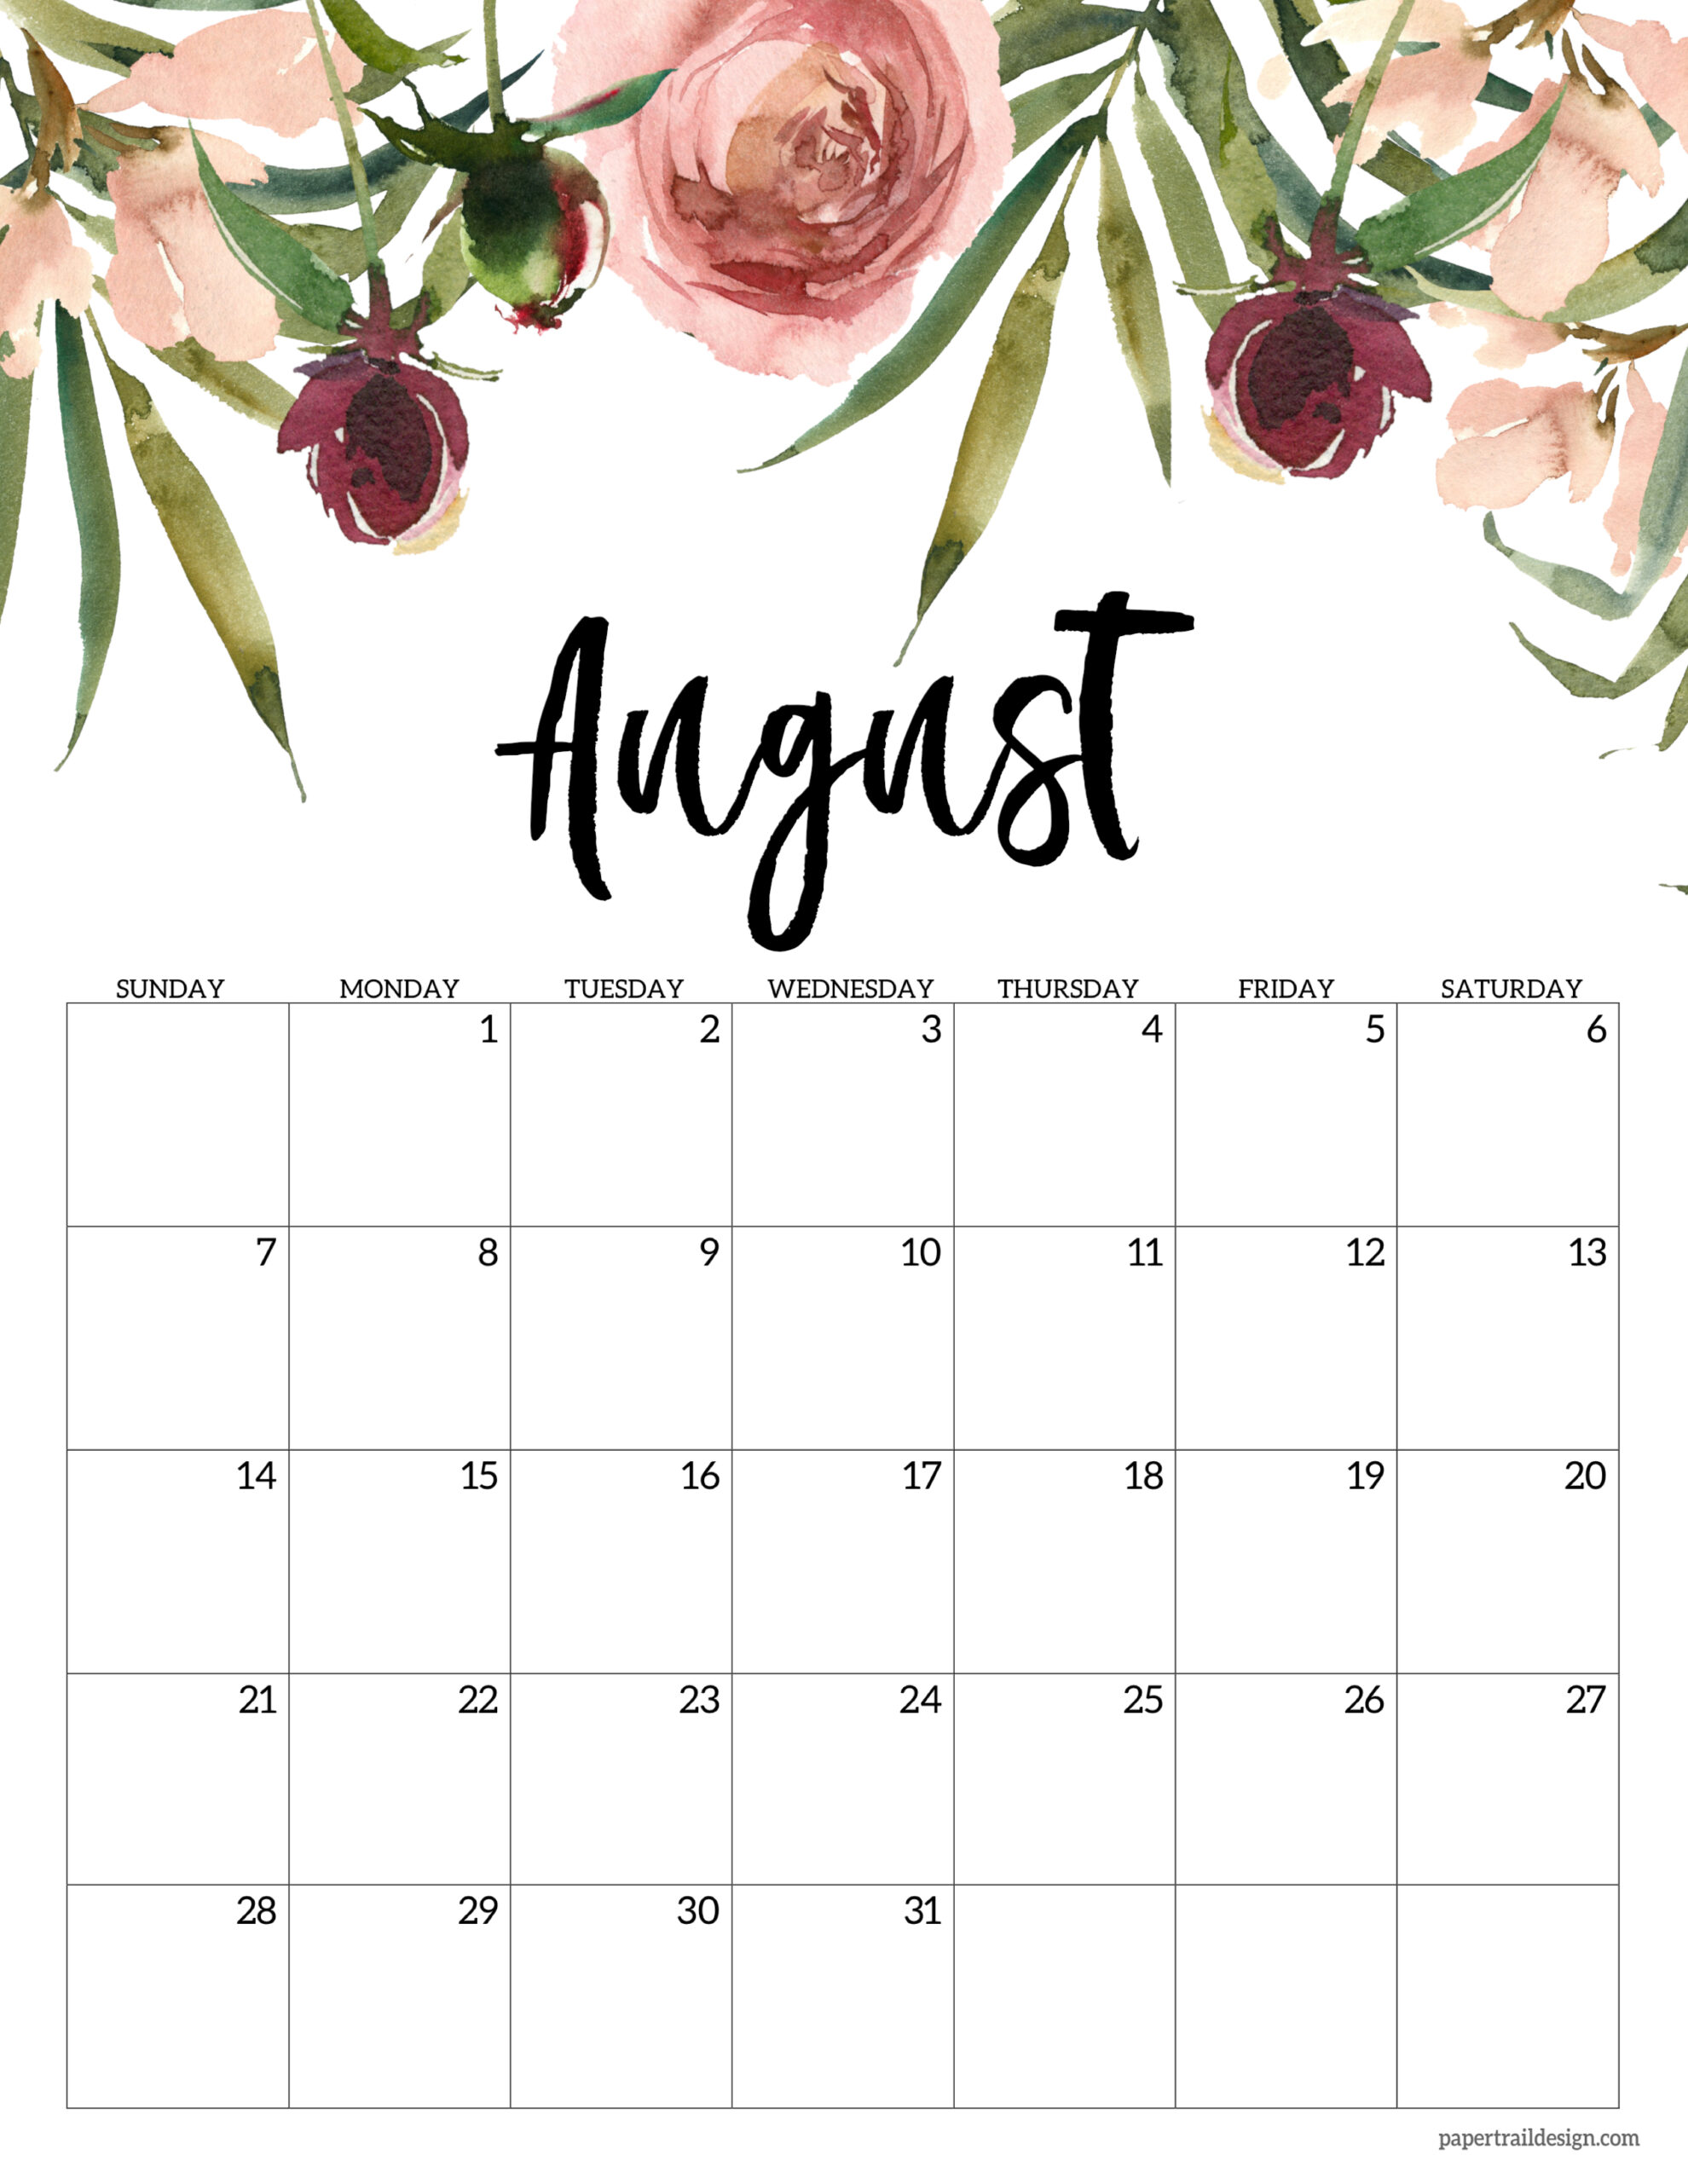 august-2022-calendar-printable